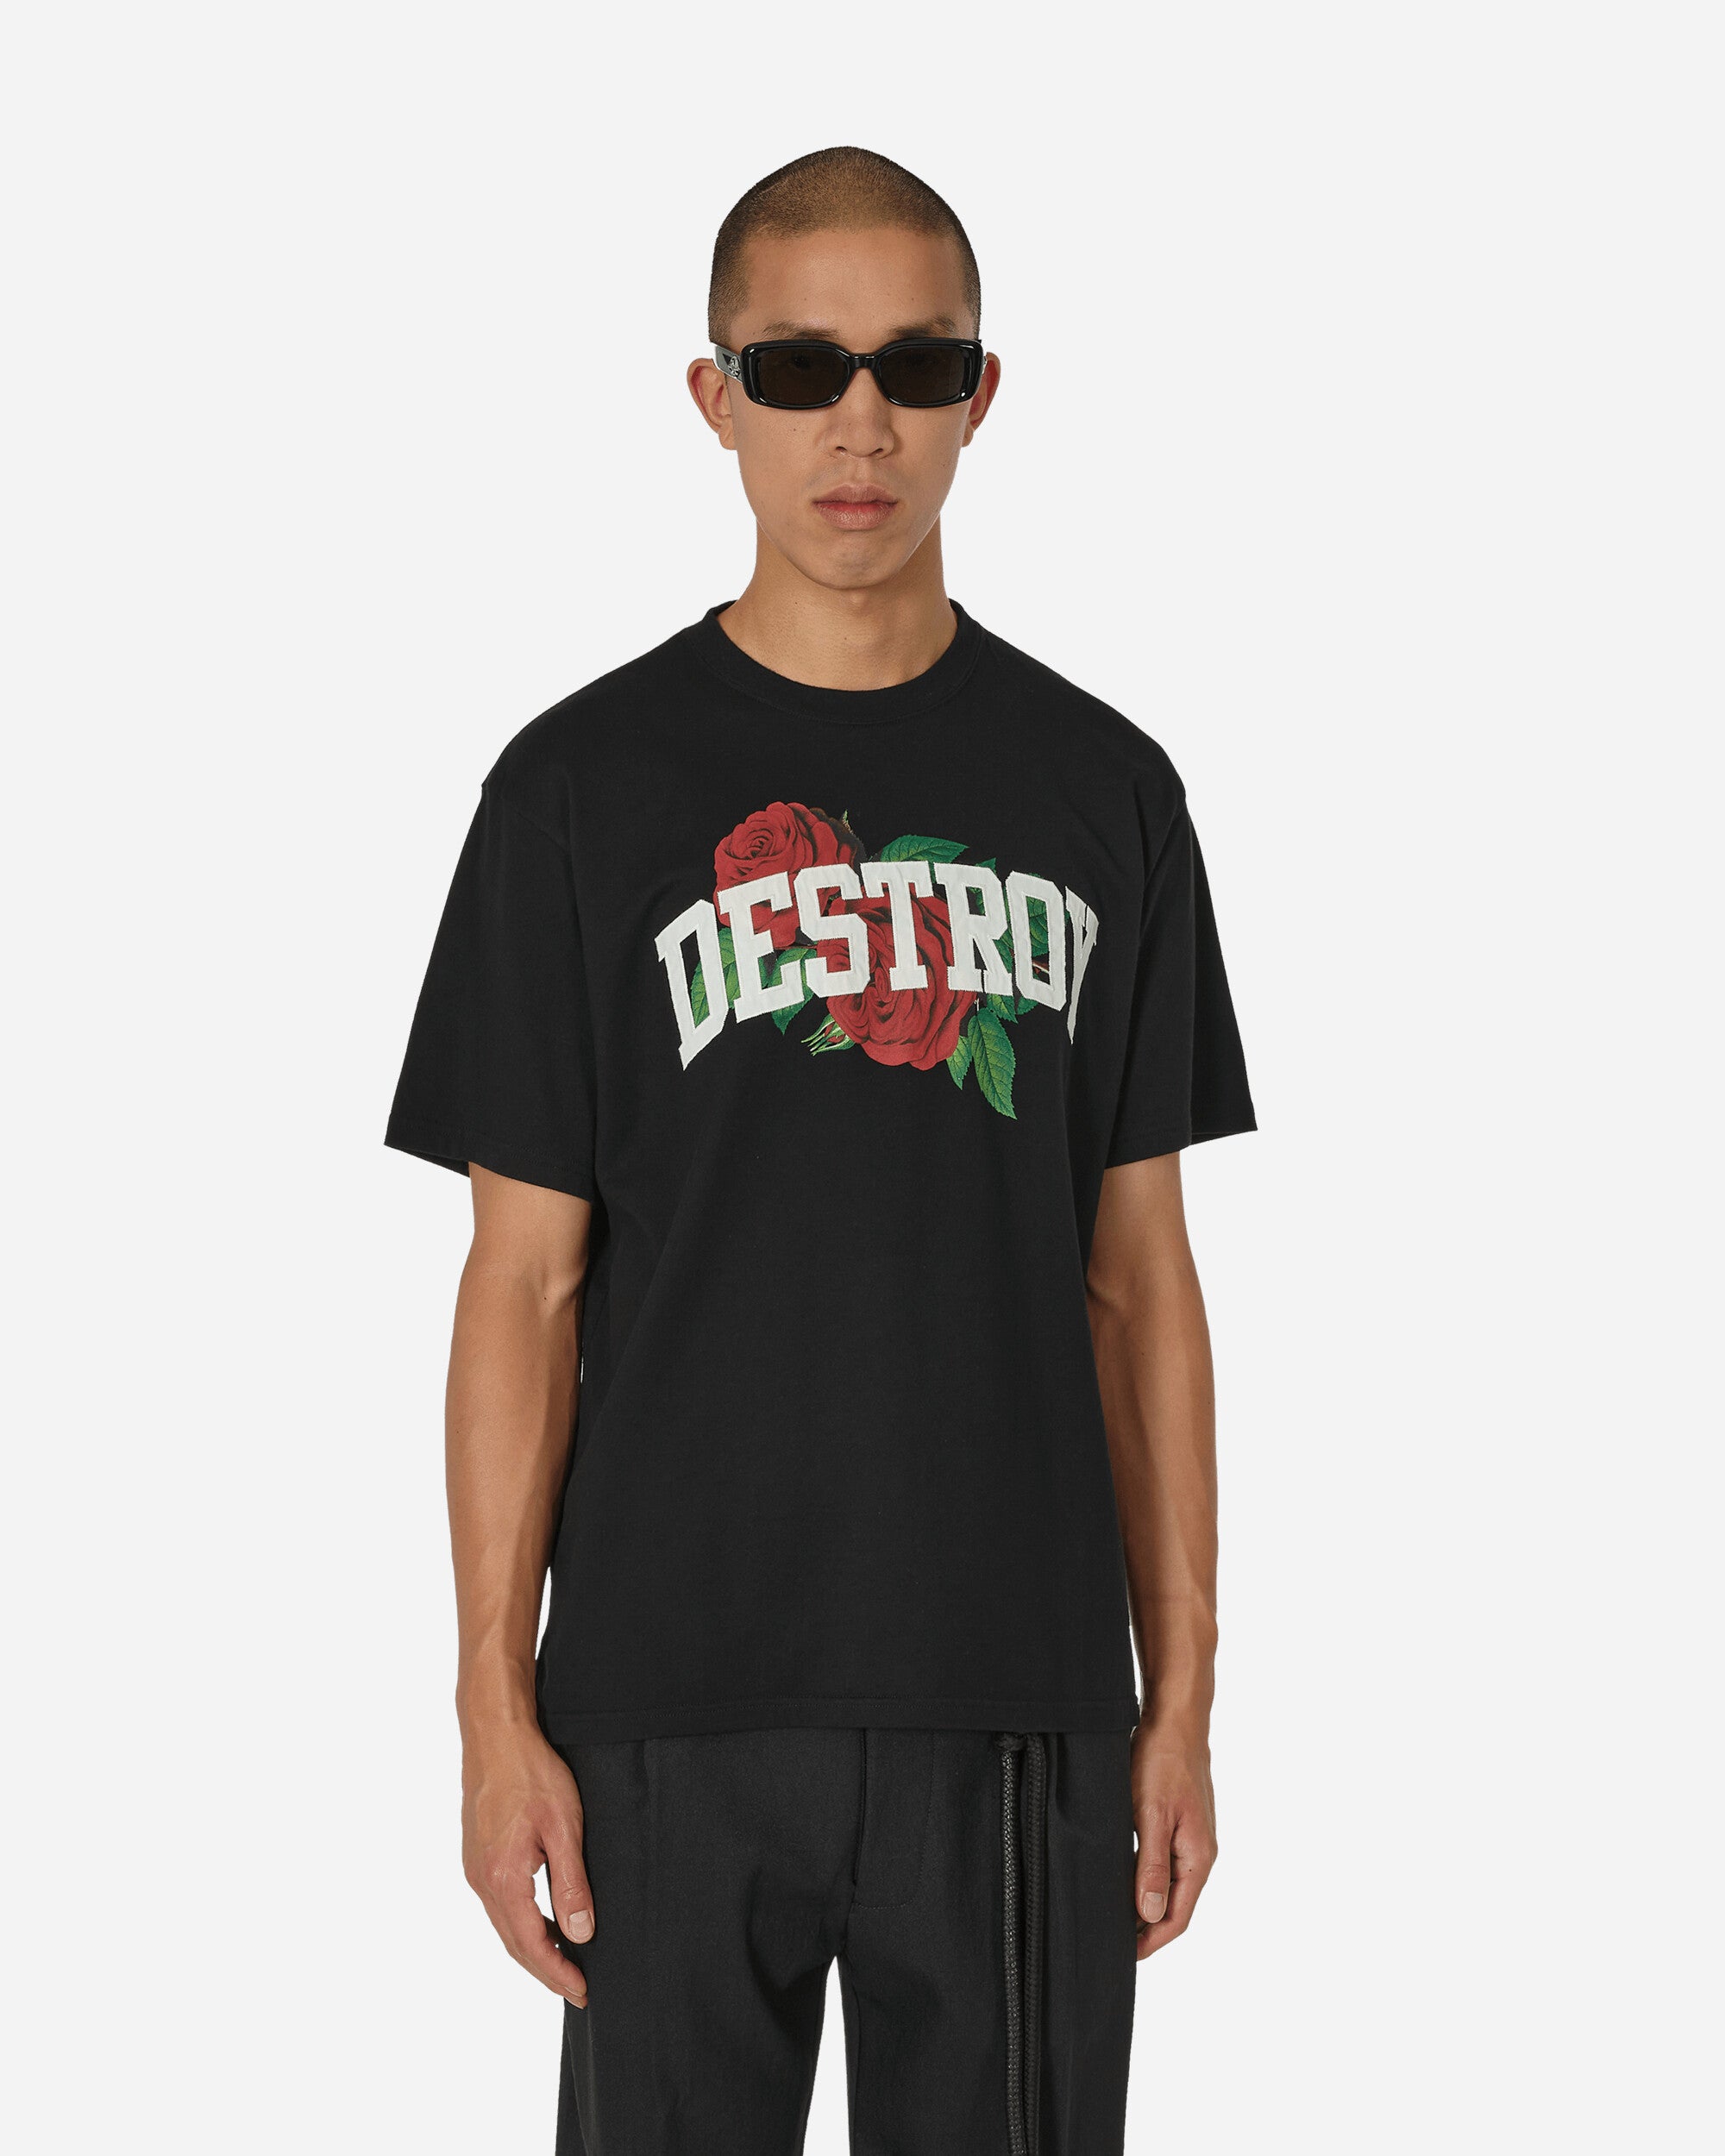 Undercover Destroy T-Shirt Black - Slam Jam® Official Store